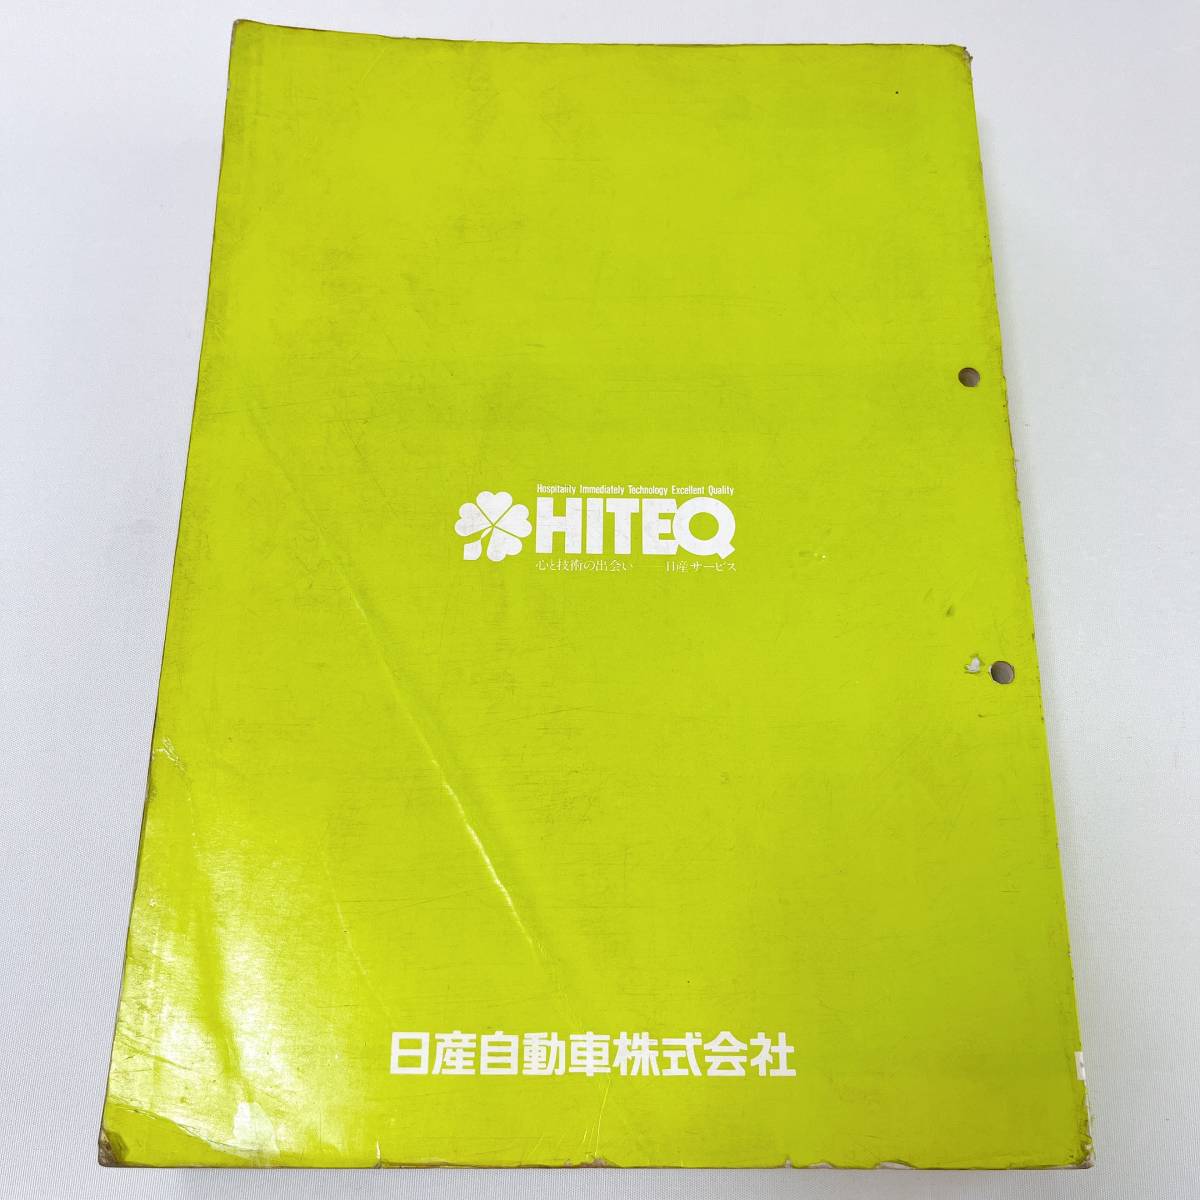  Skyline R32 type maintenance point paper 89 year 5 month R32 service book 